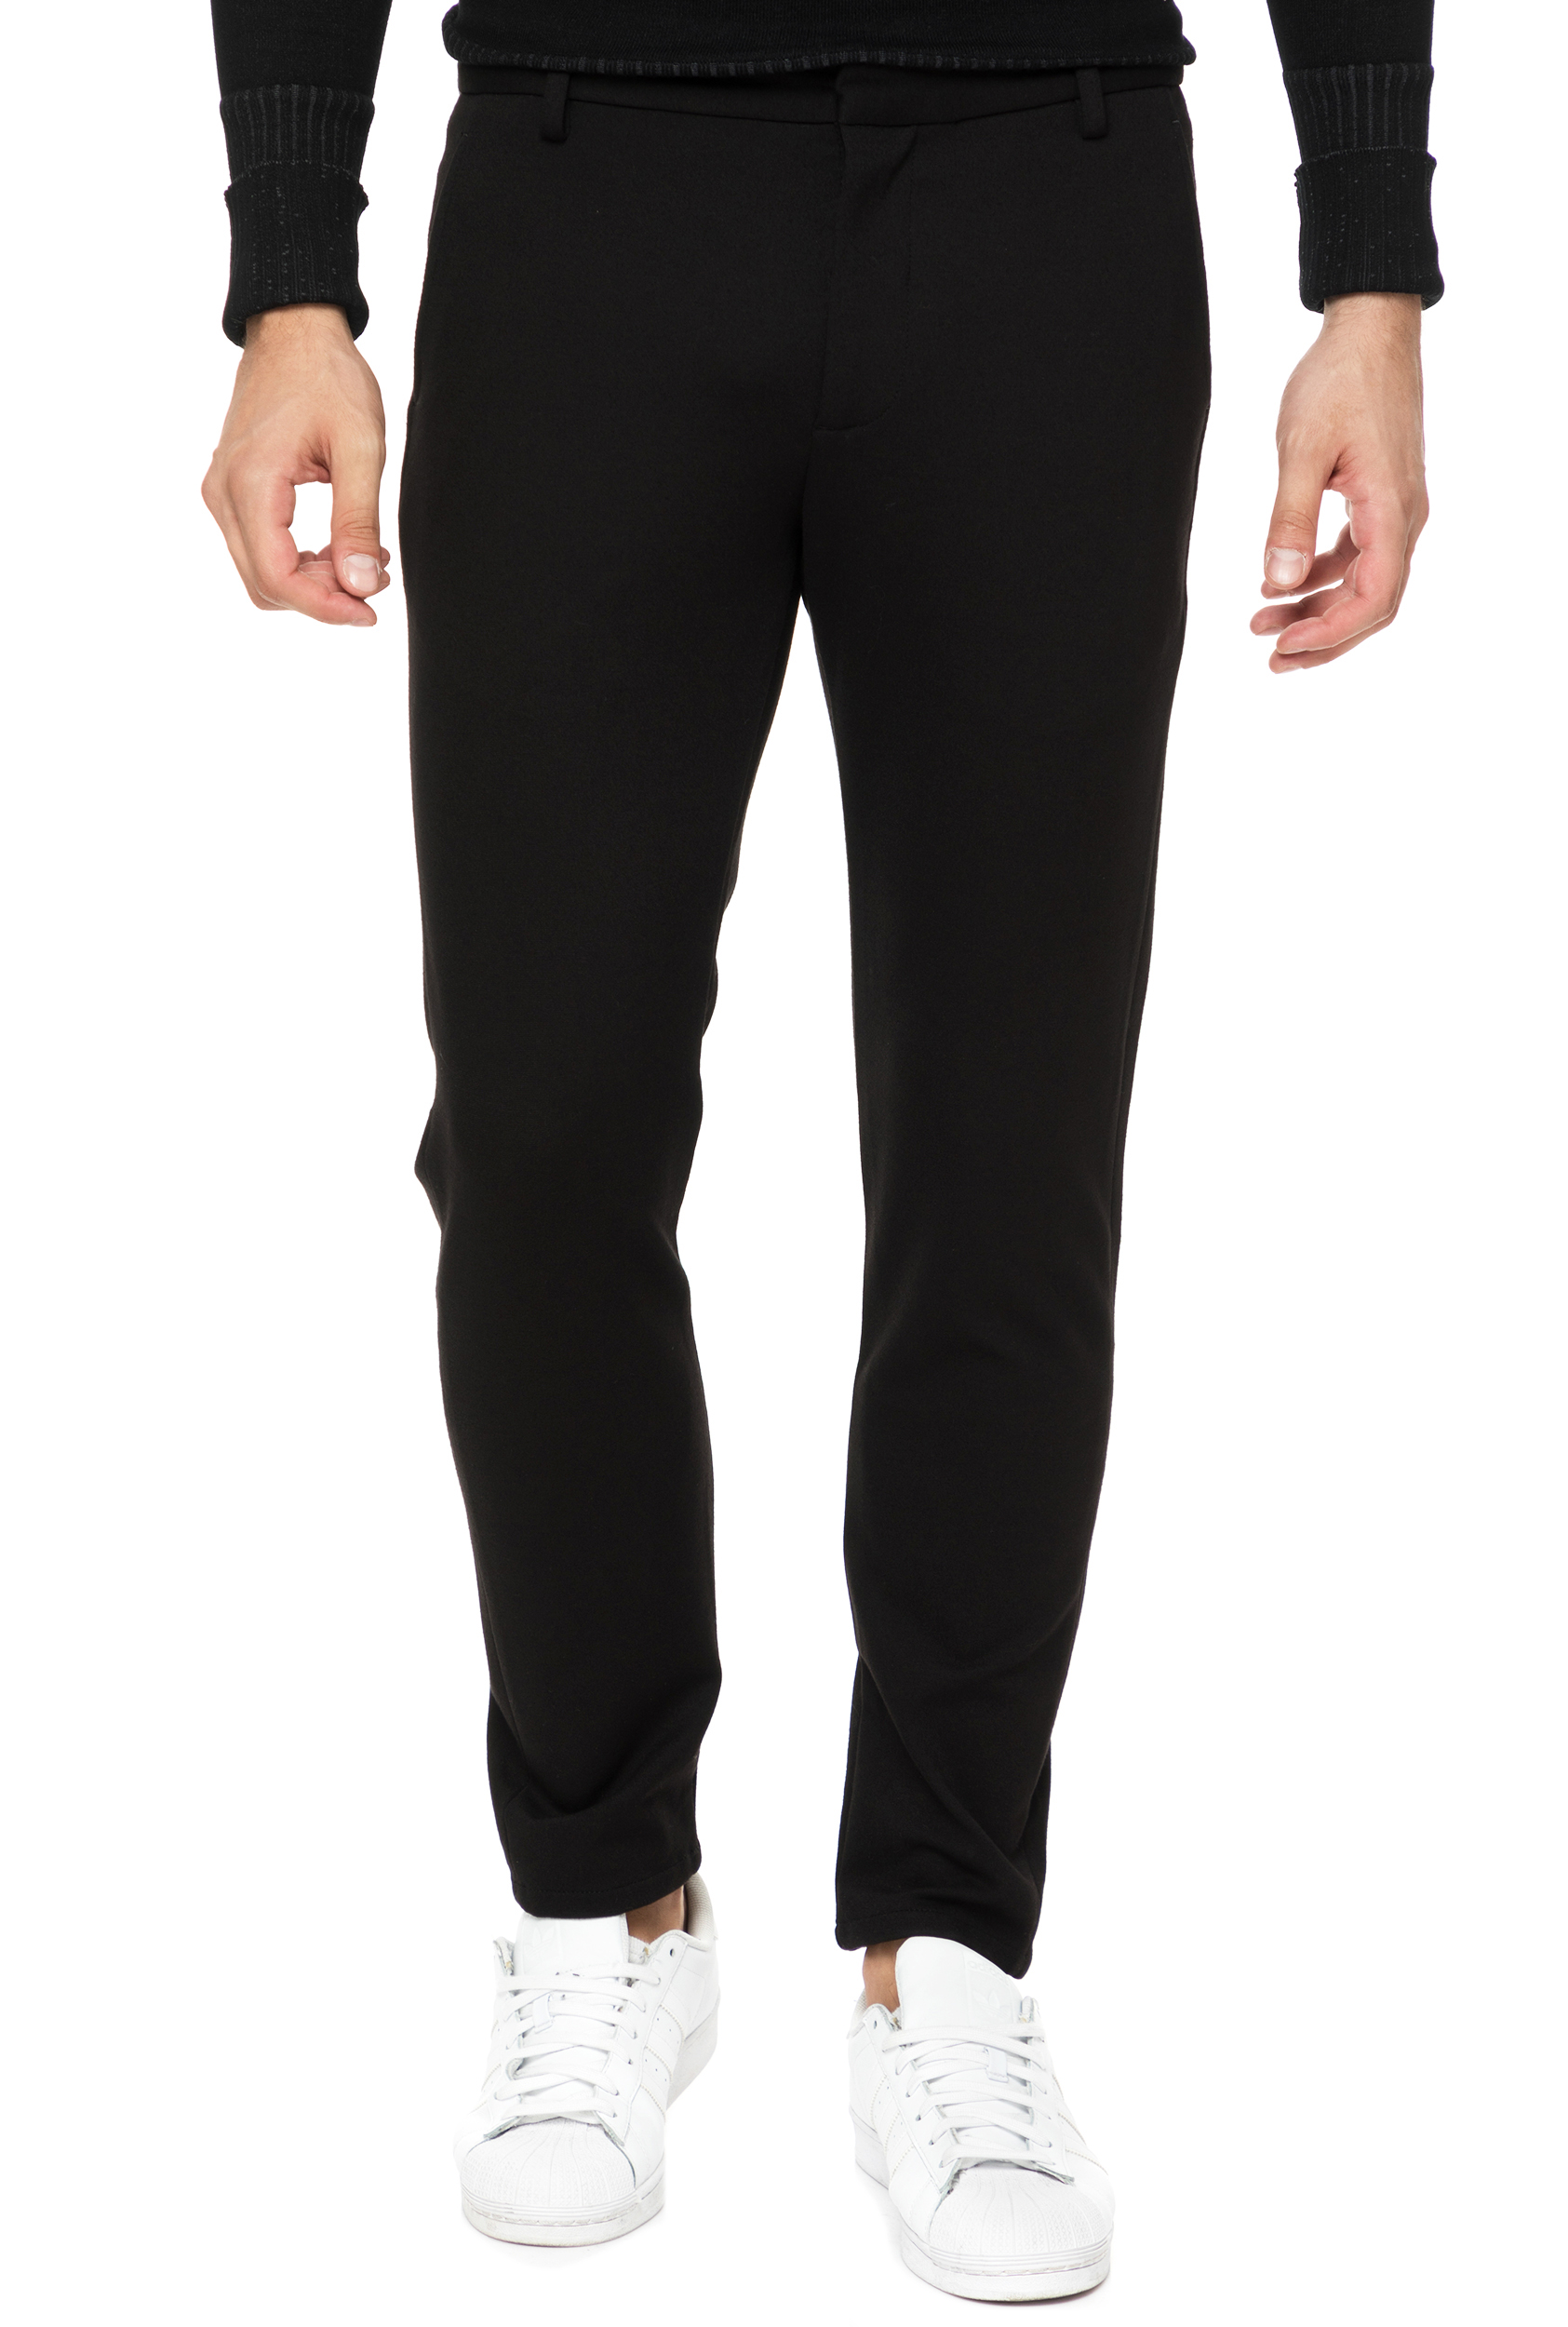 SSEINSE - Ανδρικό chino παντελόνι SSEINSE μαύρο Ανδρικά/Ρούχα/Παντελόνια/Chinos